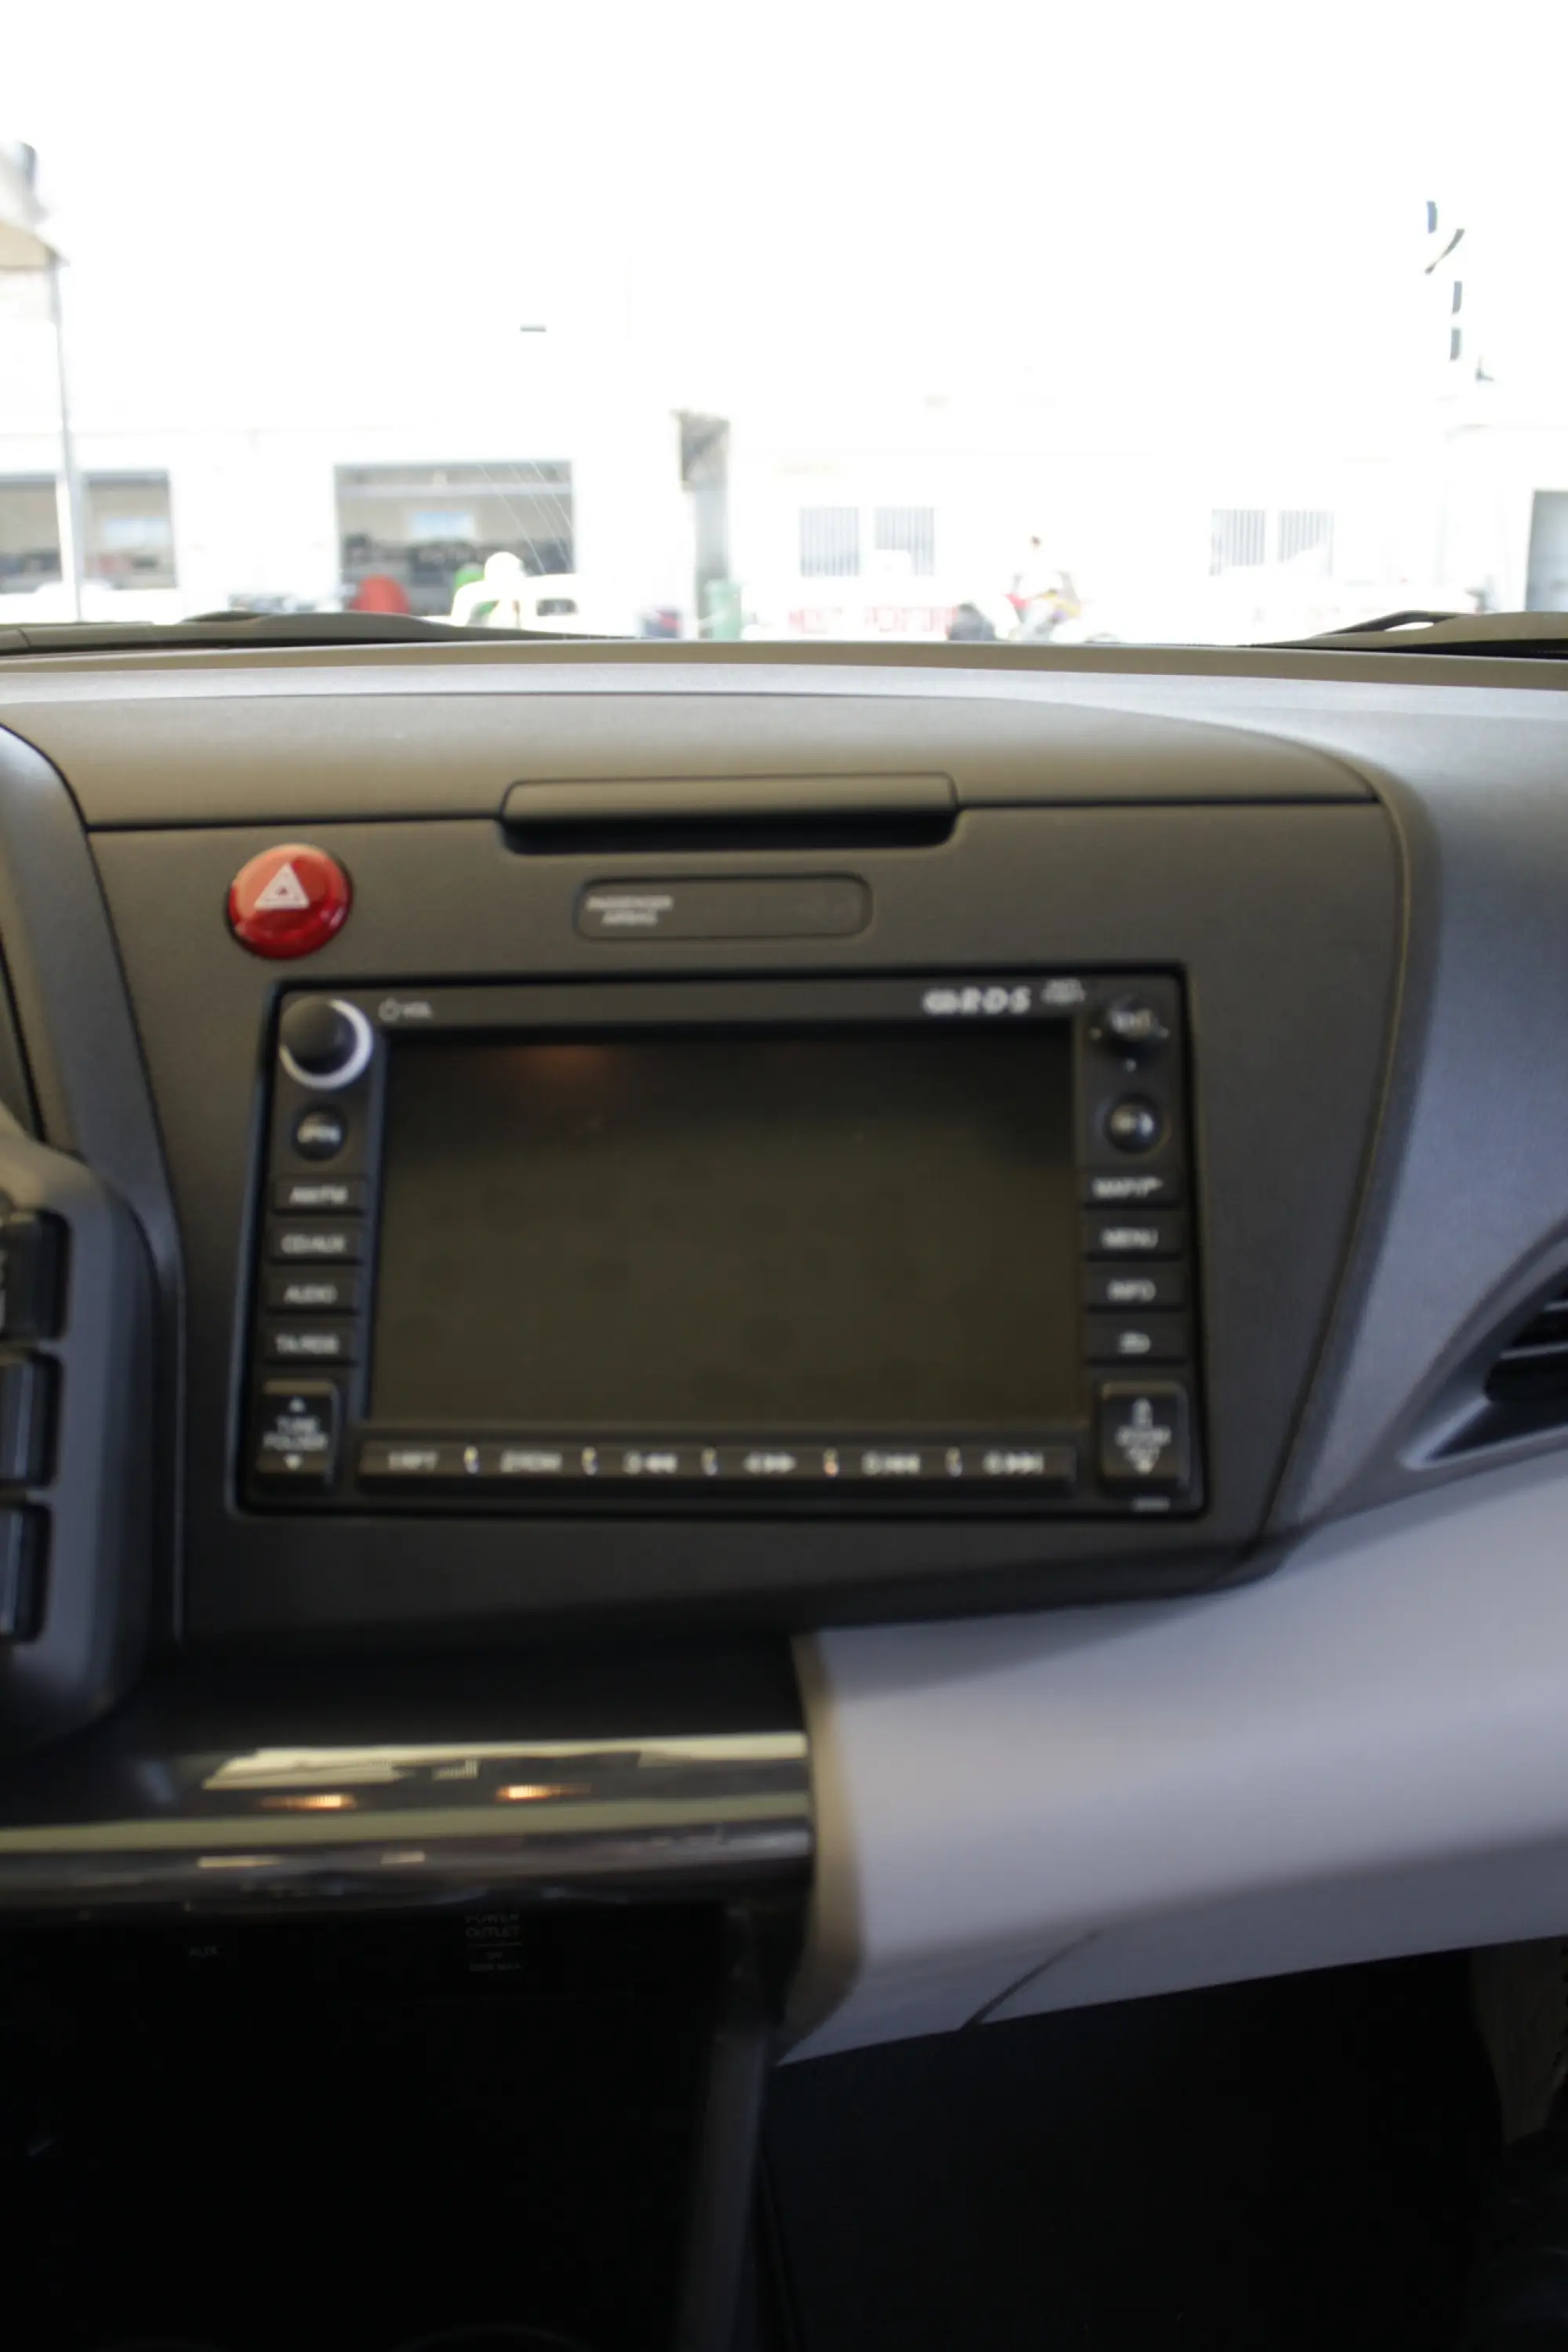 Honda CR-Z - Test Drive 2012 - 121